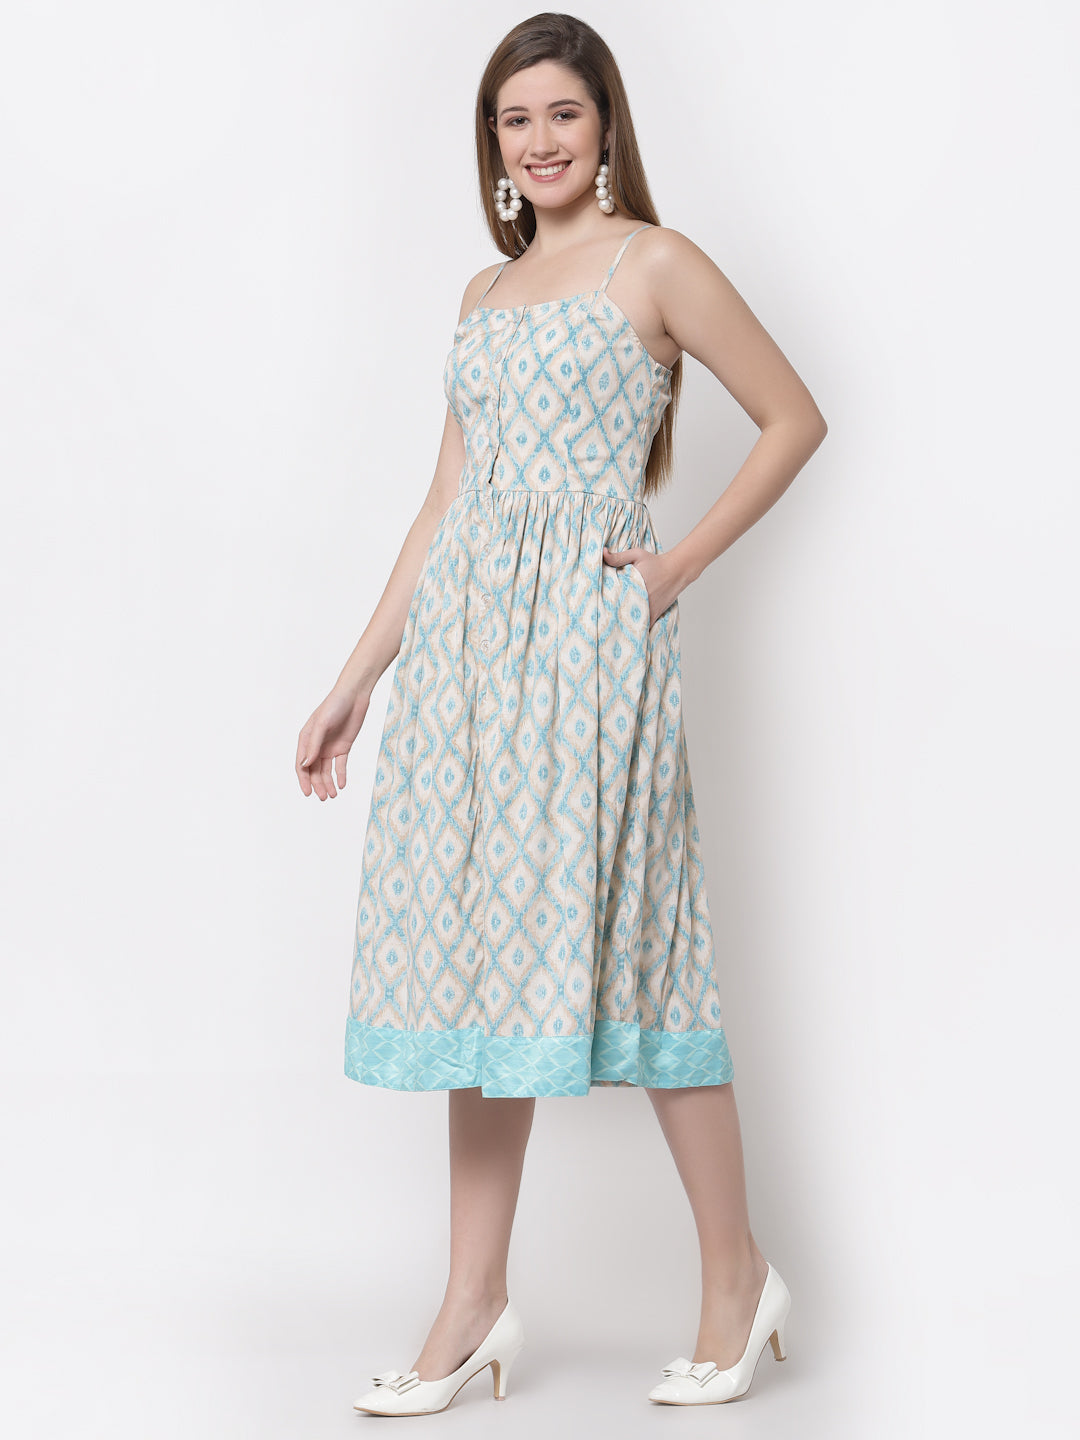 Women's Stylish Crepe Square Neck Sleeveless Printed Dress  - Myshka